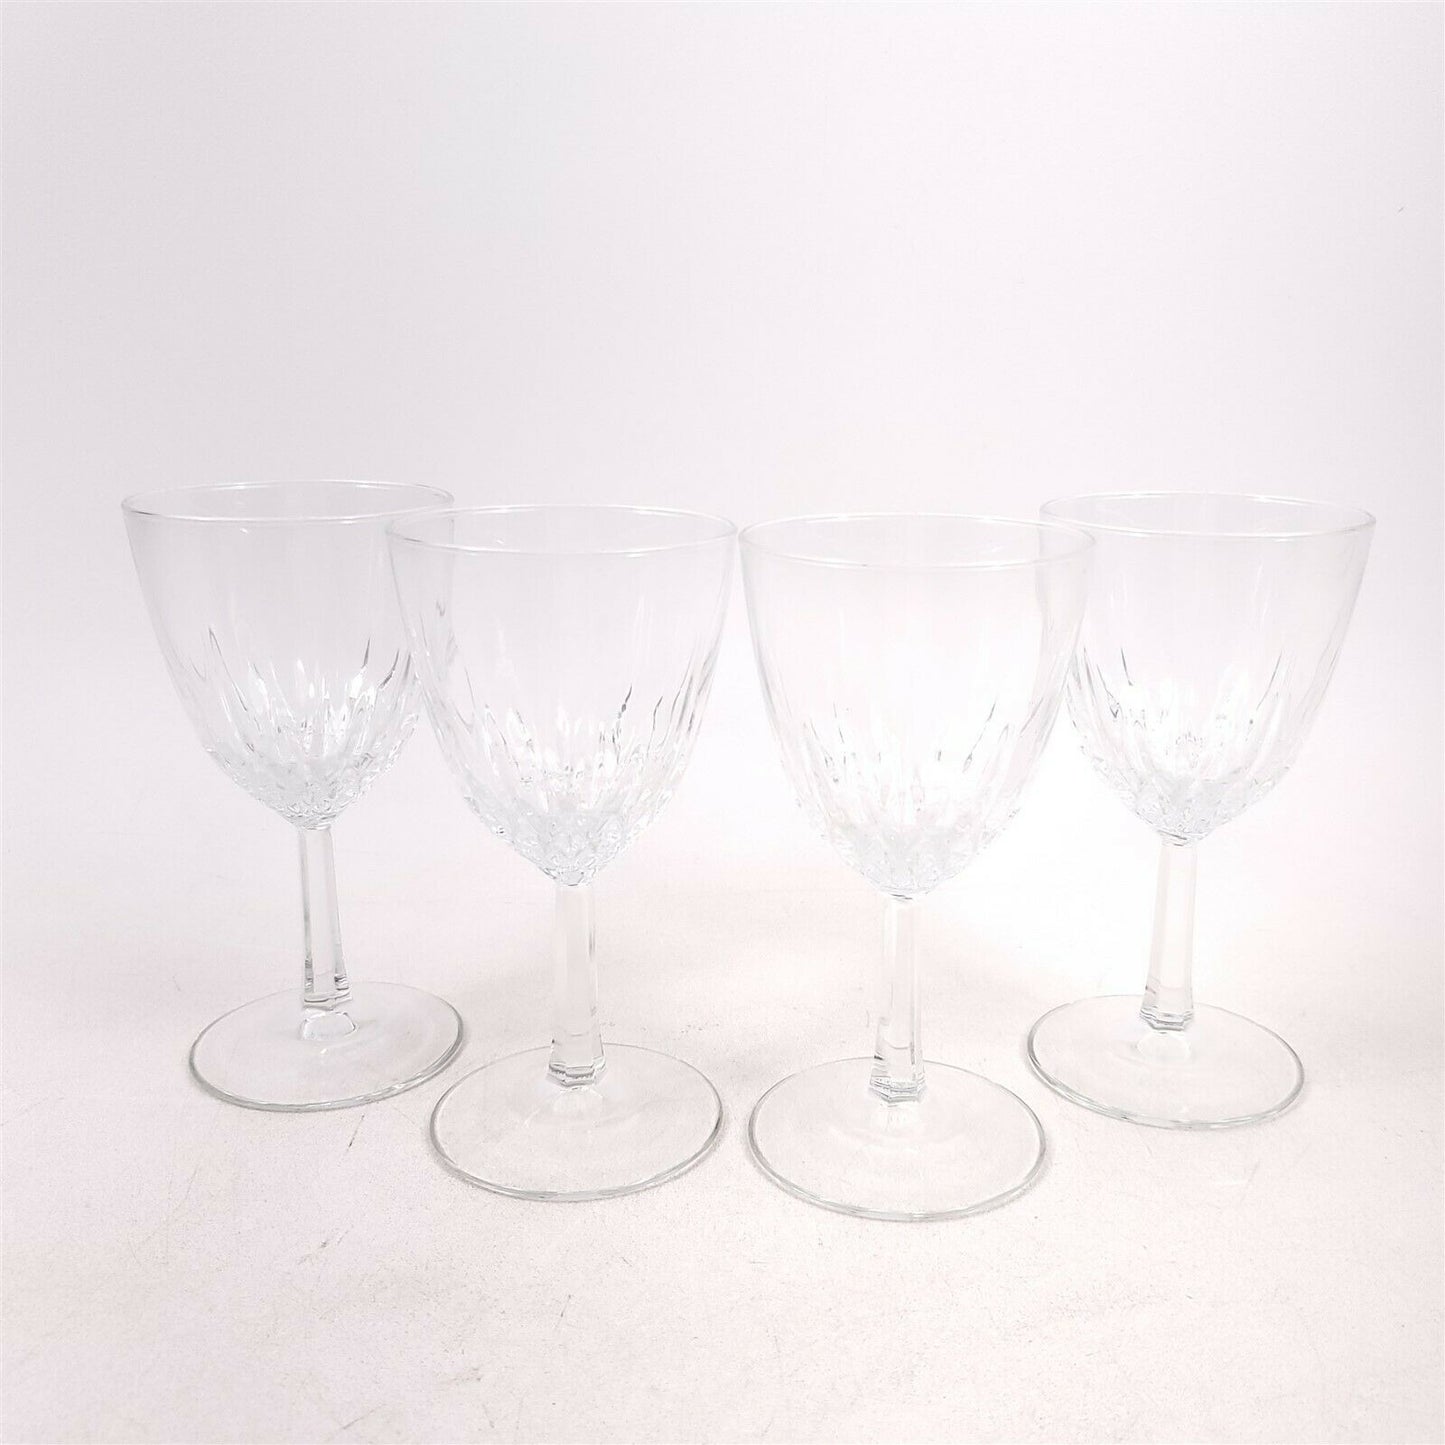 4 Vintage Lead Glass Crystal Water Goblet Glasses 5.75"